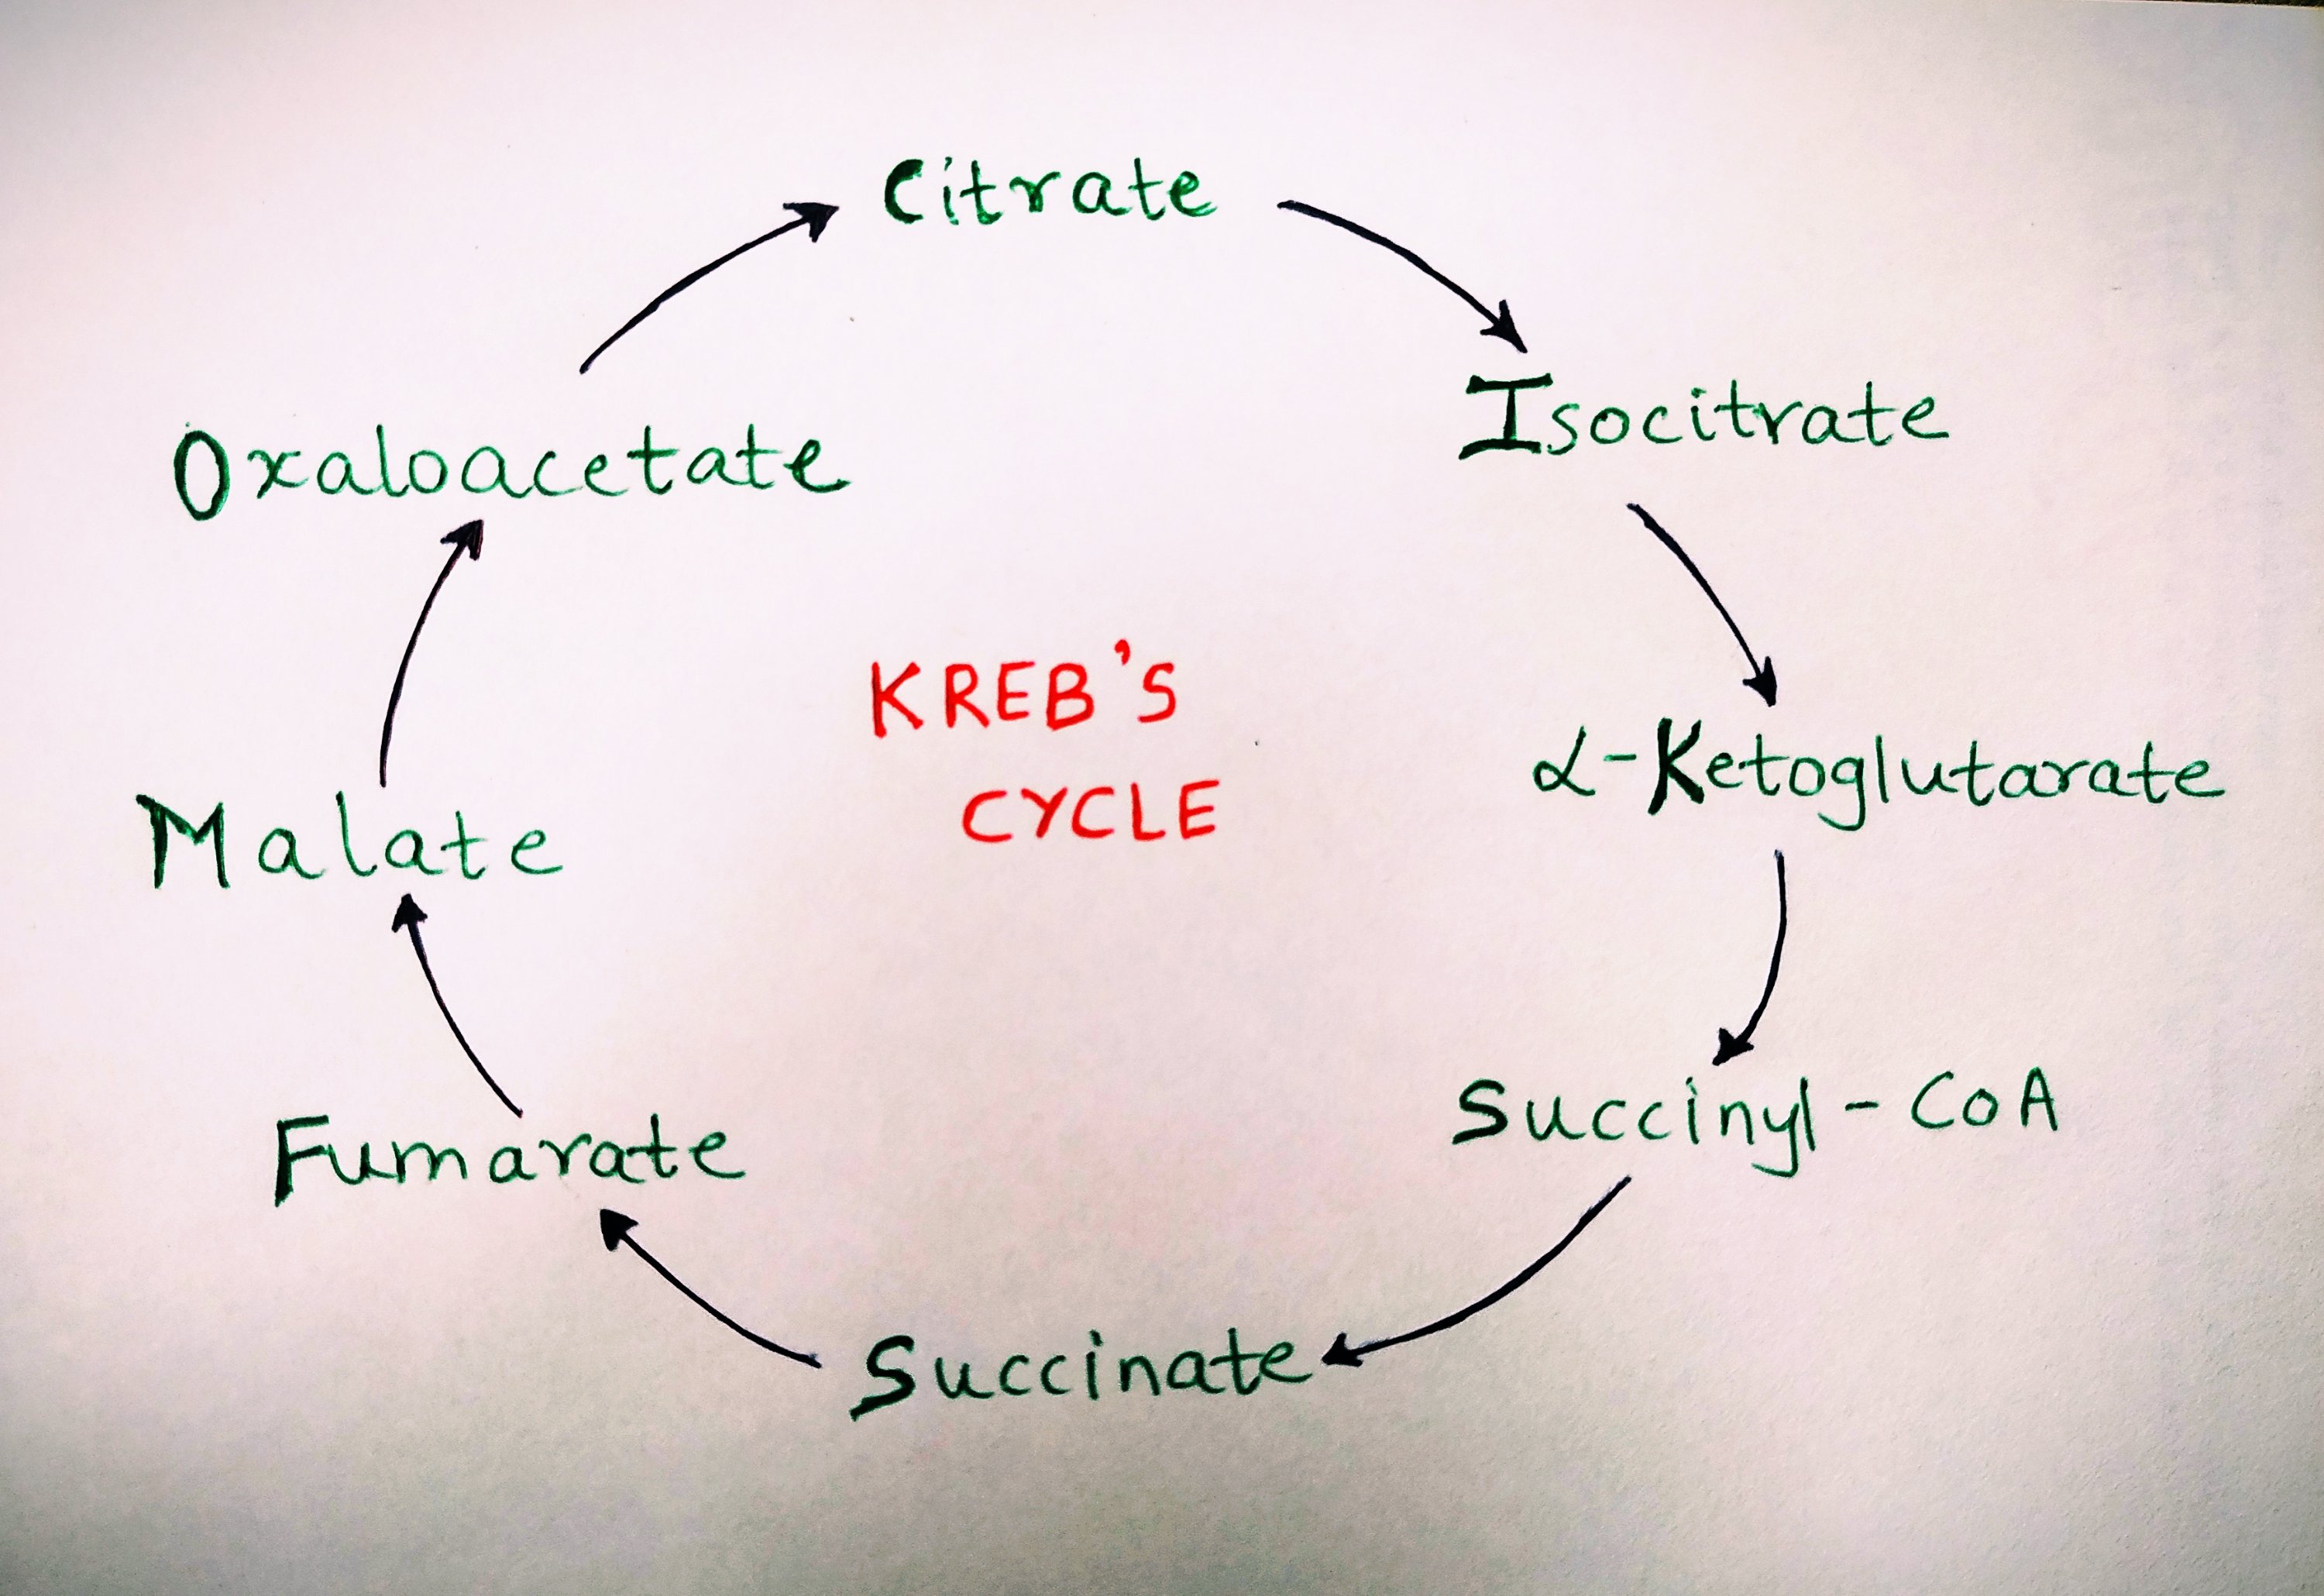 Kreb’s cycle mnemonic.